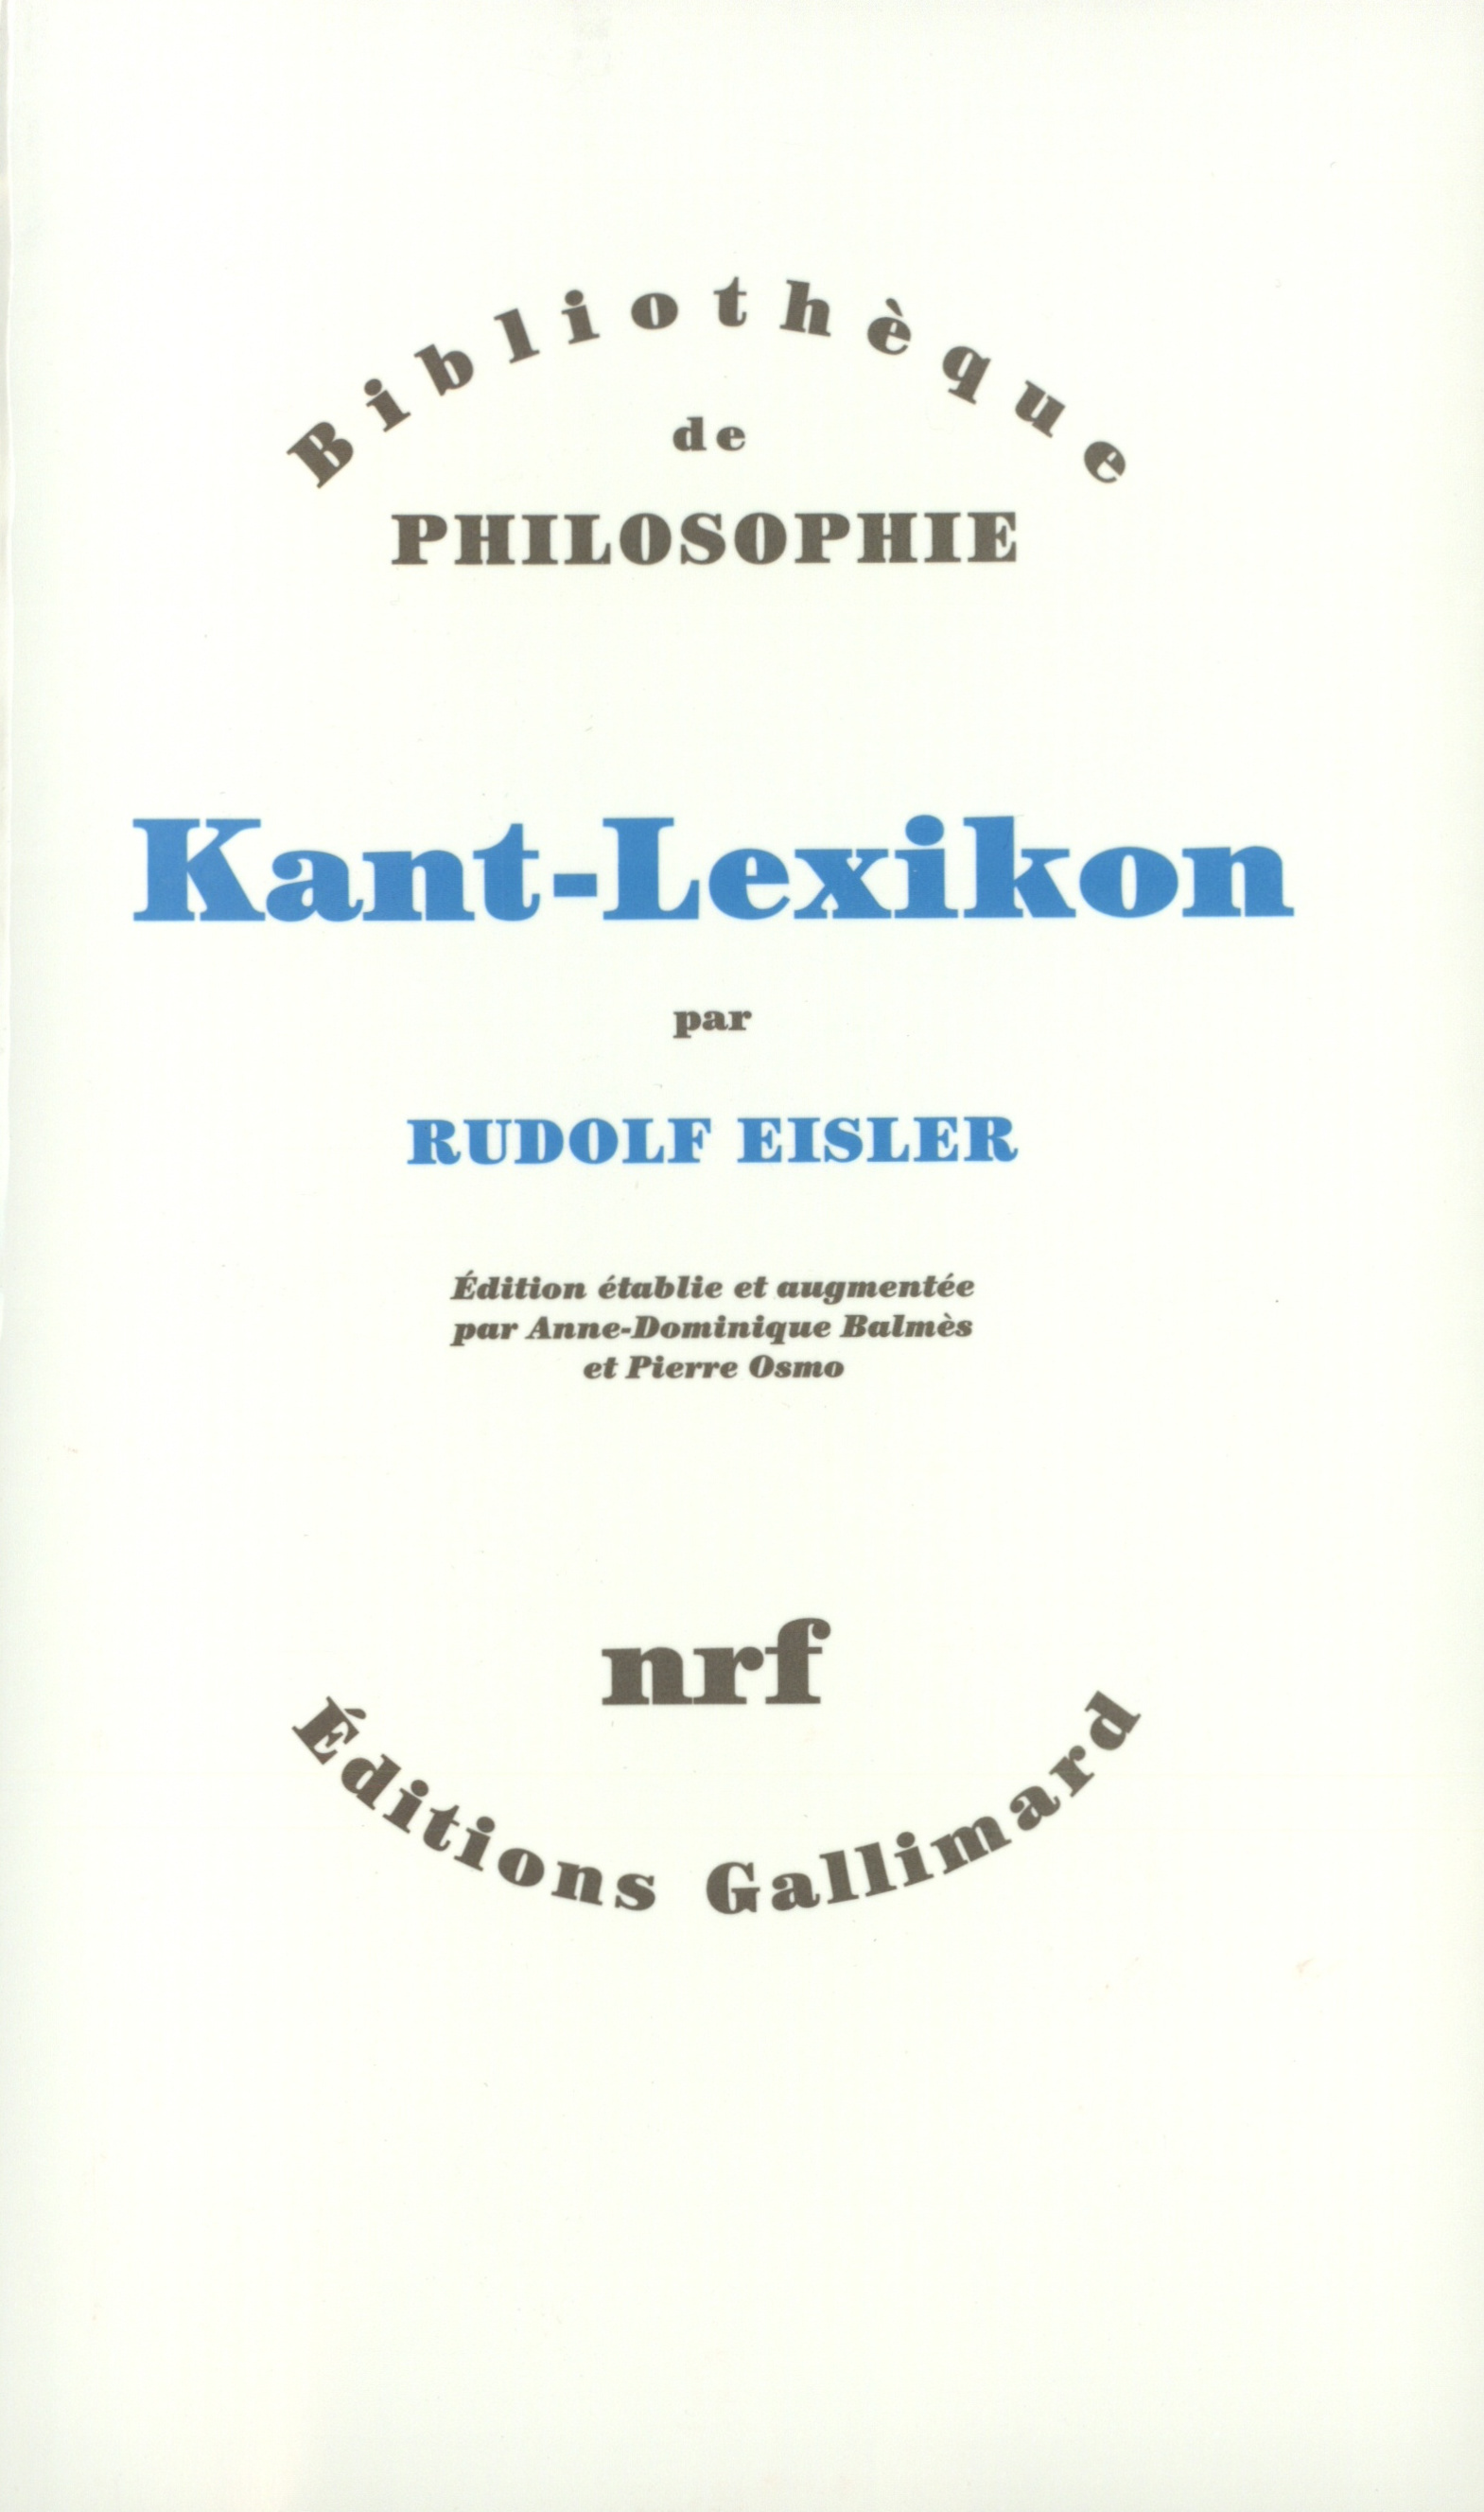 Kant-Lexikon (9782070729517-front-cover)